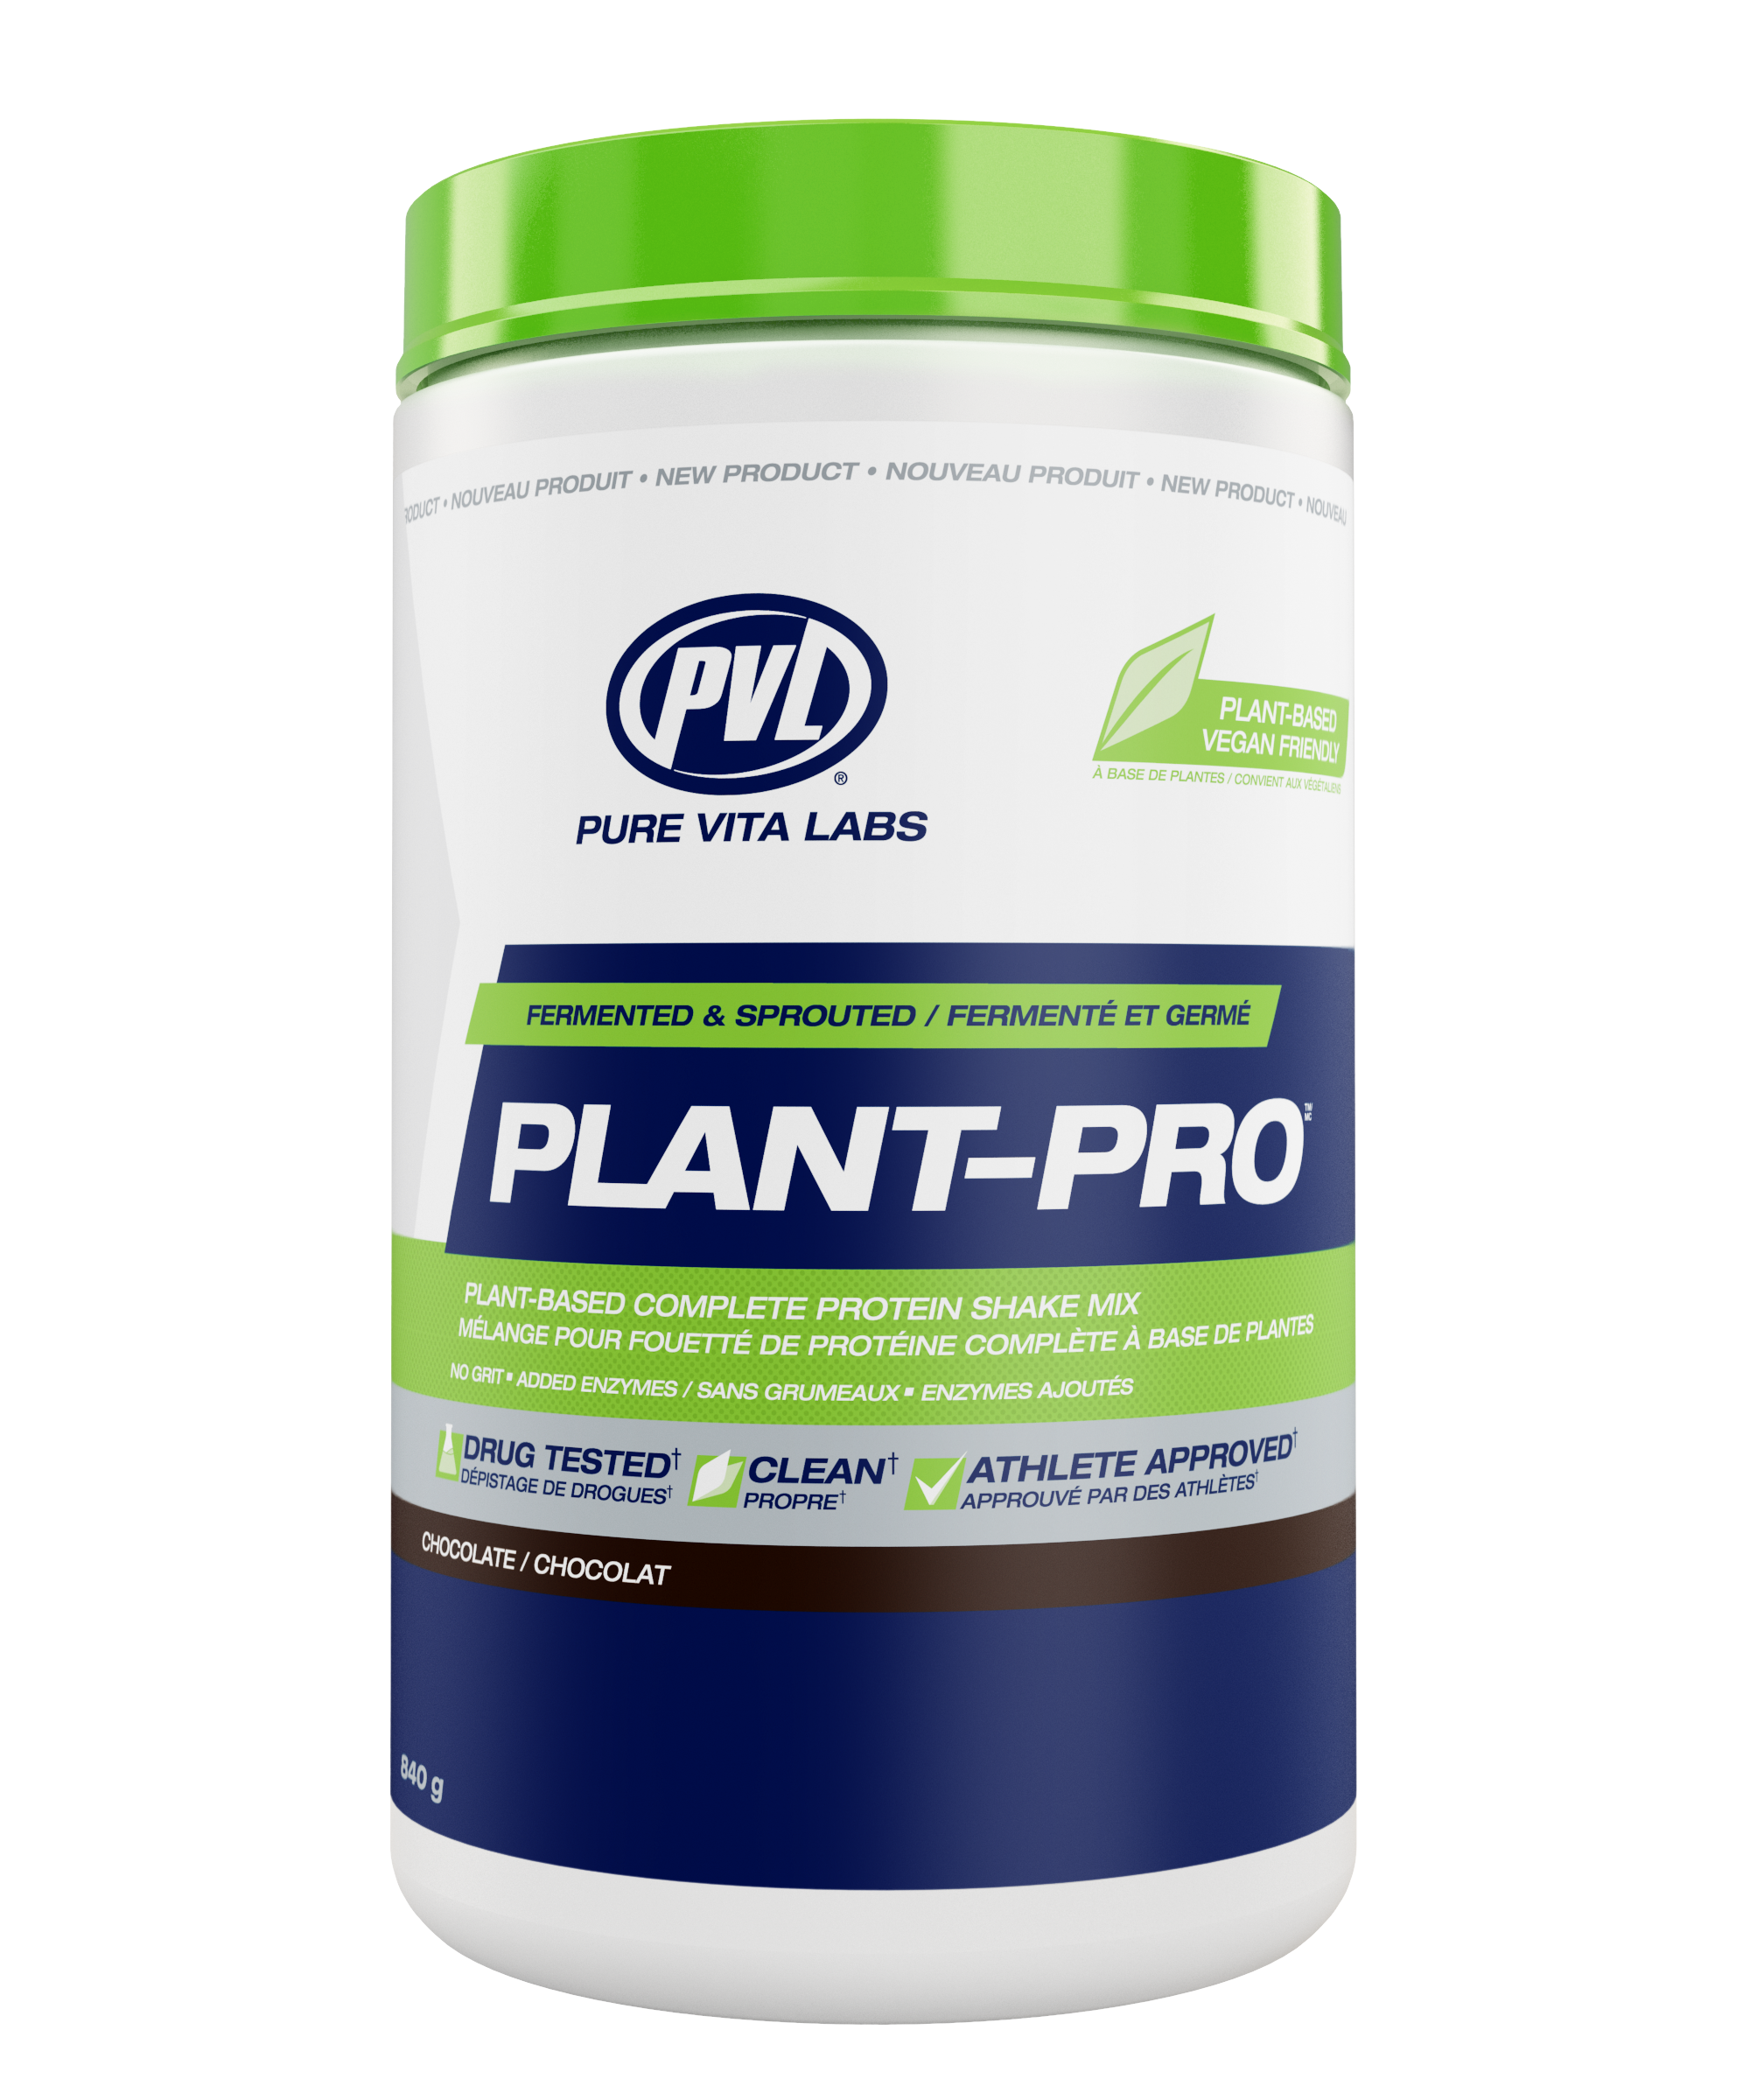 PVL Plant-Pro - Chocolate (840g) - Lifestyle Markets